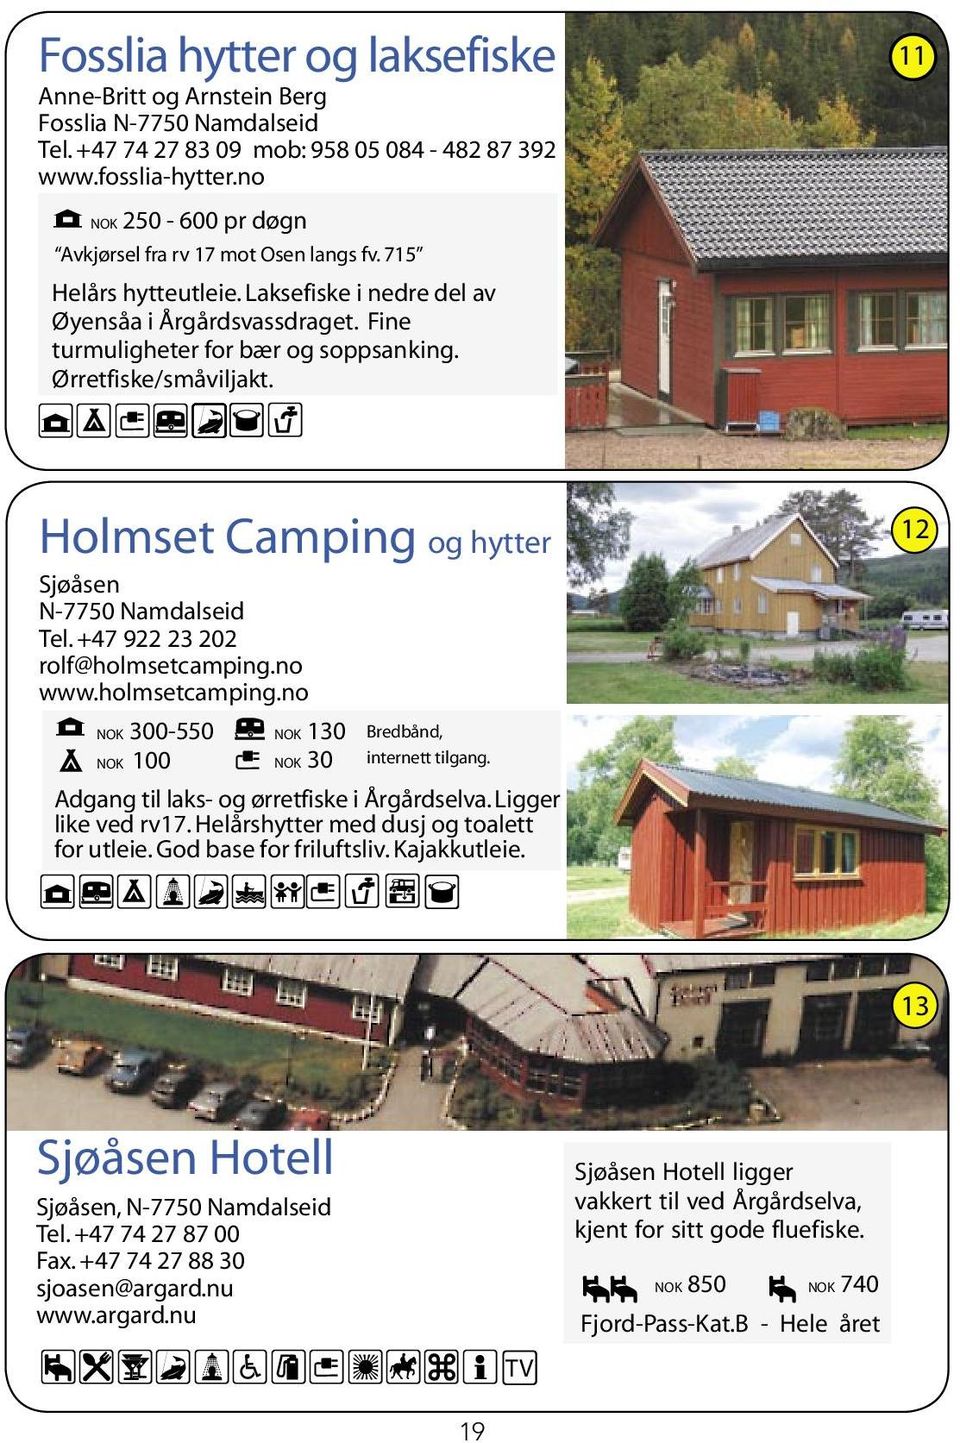 Ørretfiskesmåviljakt. ZhZcZwZCZZZZZZZF Z Holmset Camping og hytter Sjøåsen N-7750 Namdalseid Tel. +47 922 23 202 rolf@holmsetcamping.